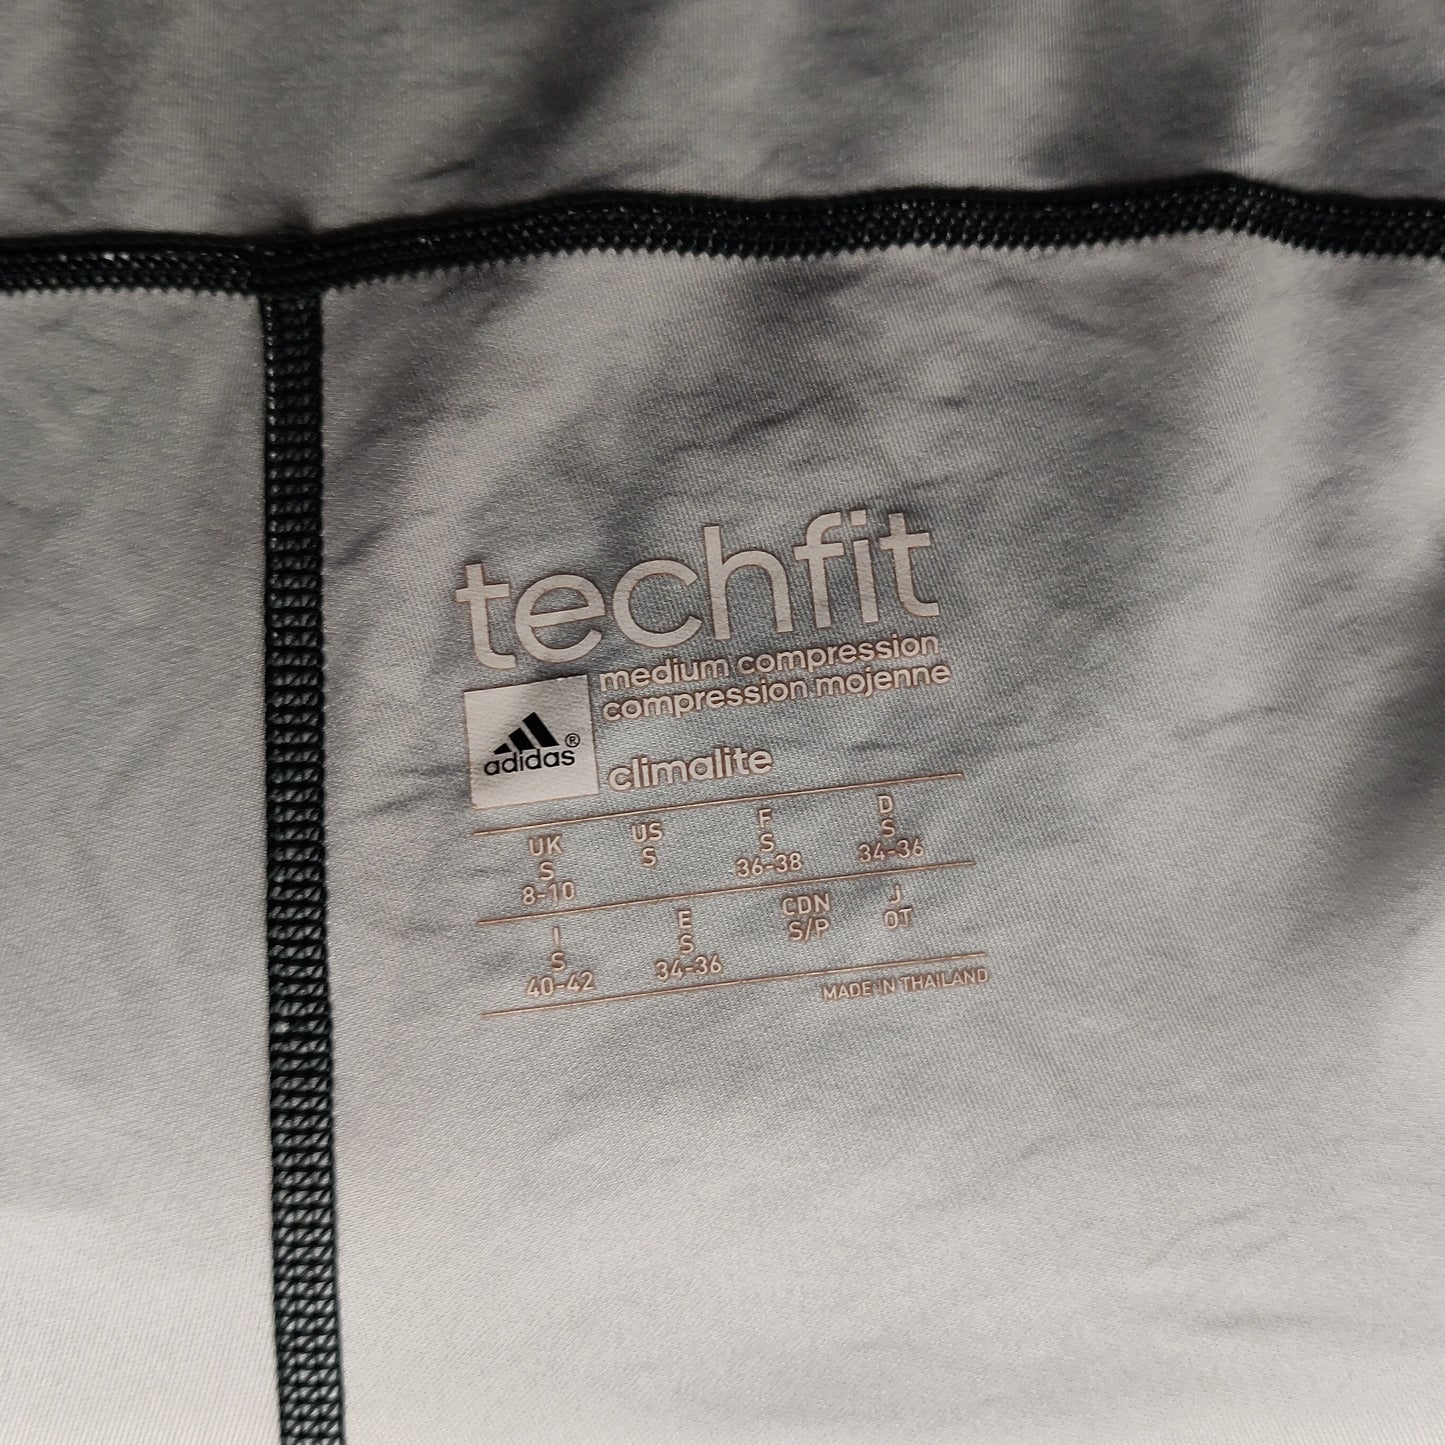 Adidas Techfit Climalite Black Grey Capri Leggings Women Size Small UK 8-10